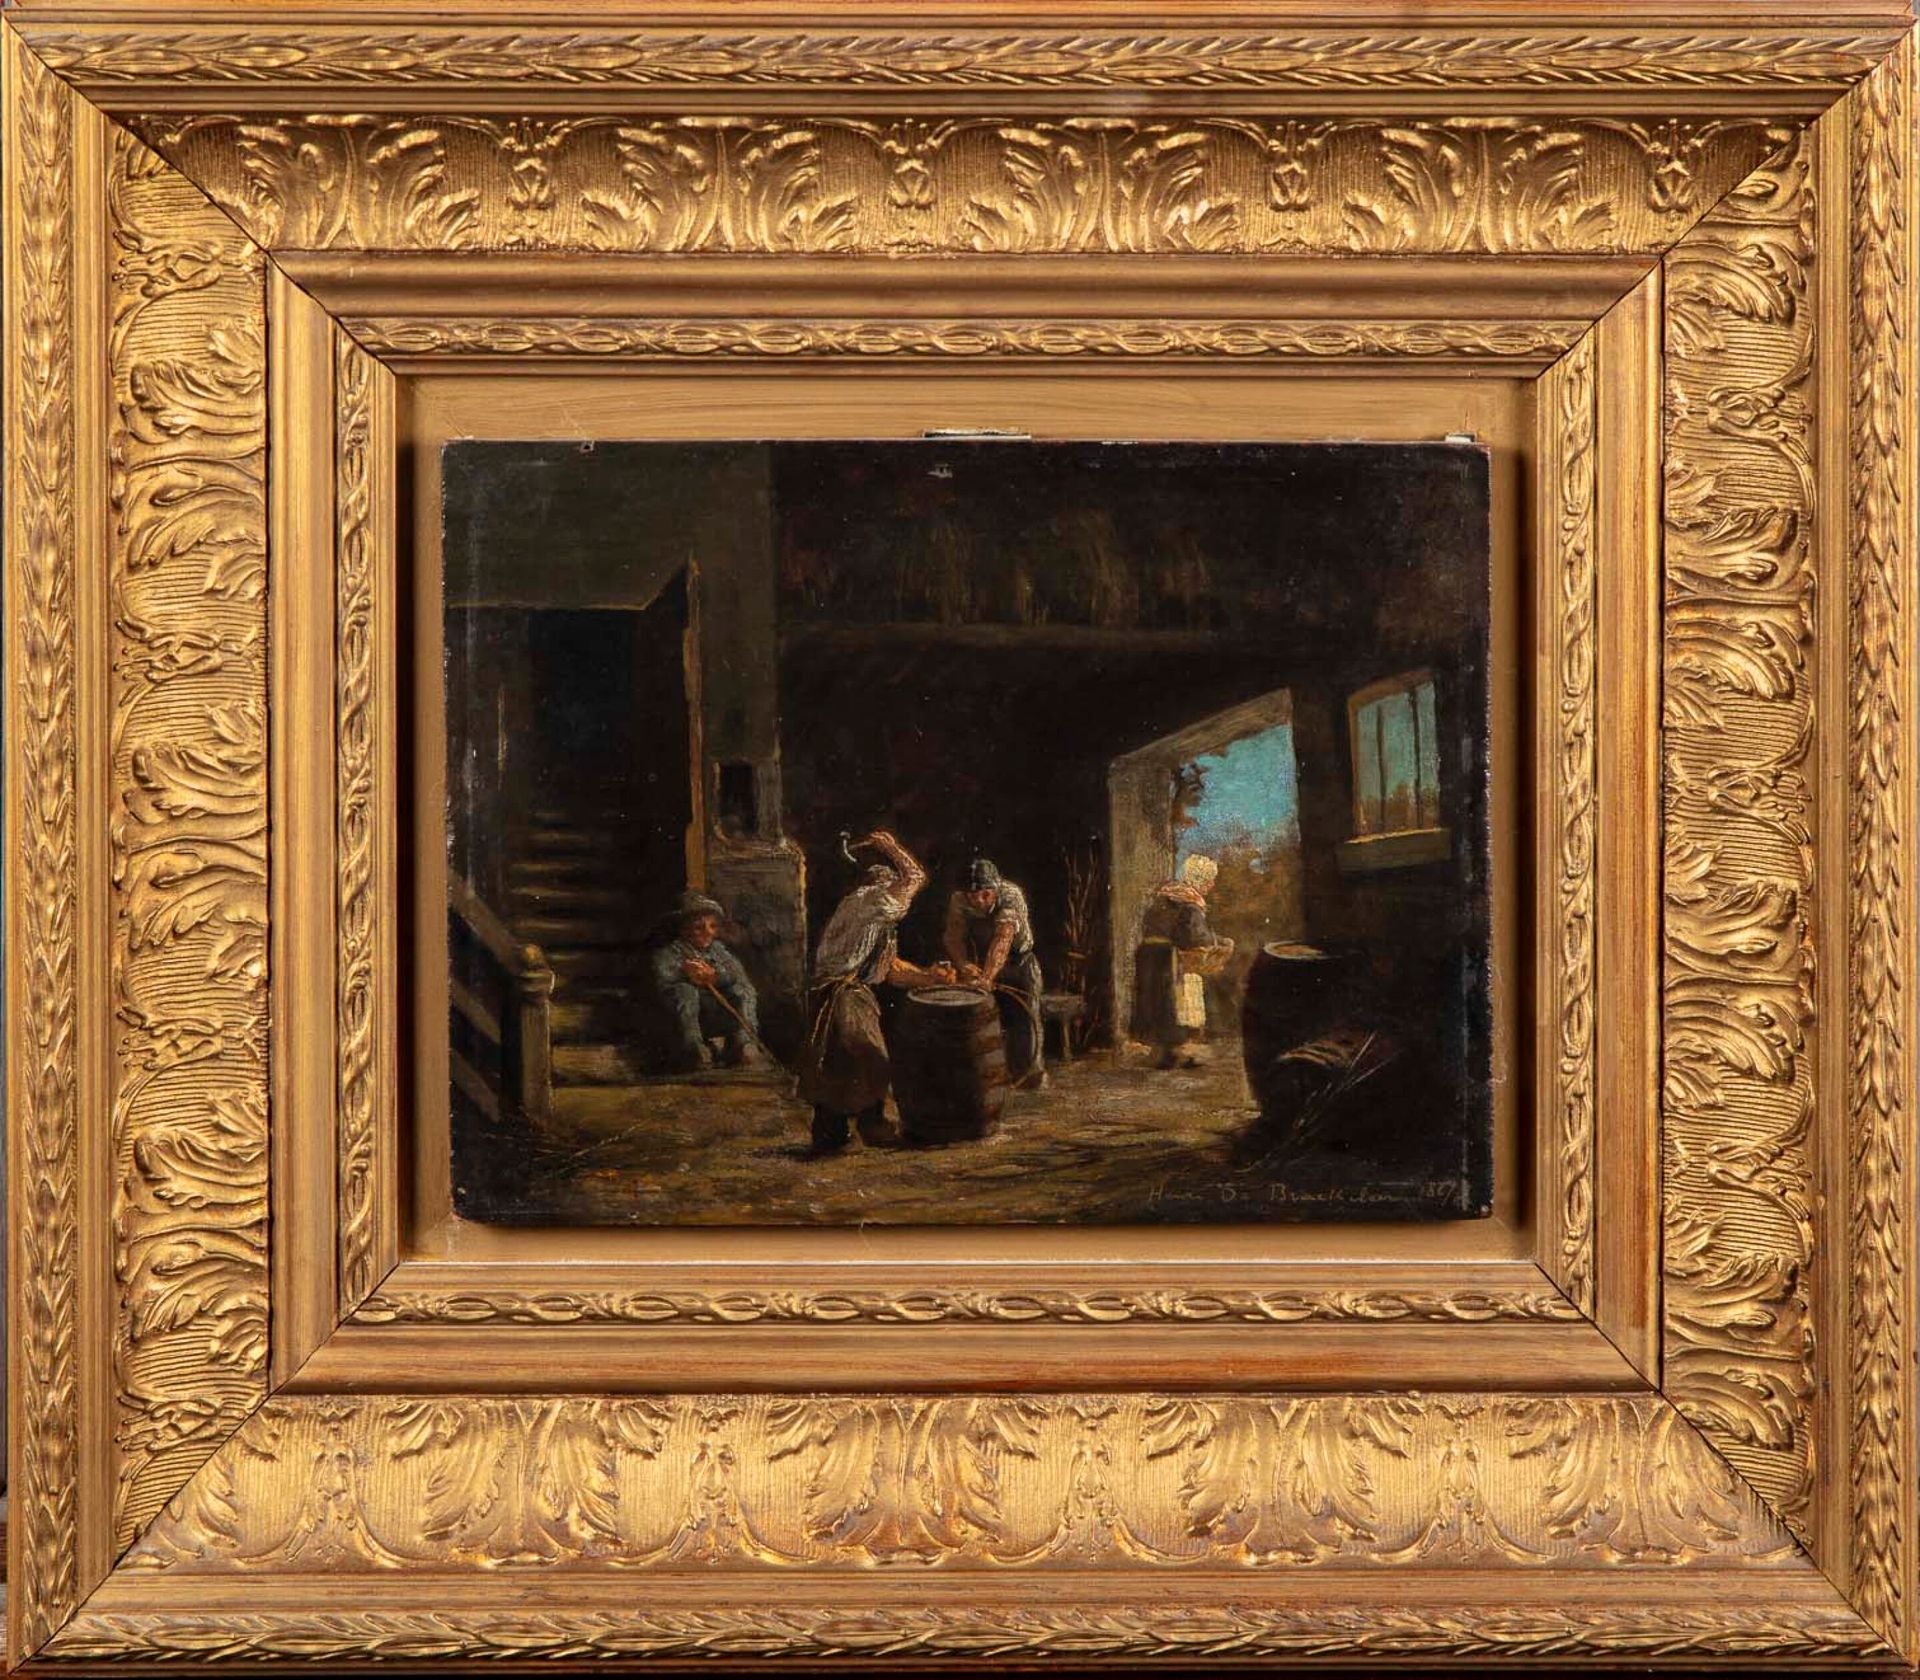 BRAEKELLER Henri de BRAEKELLER (1840-1888)

The interior of a forge

Oil on pane&hellip;